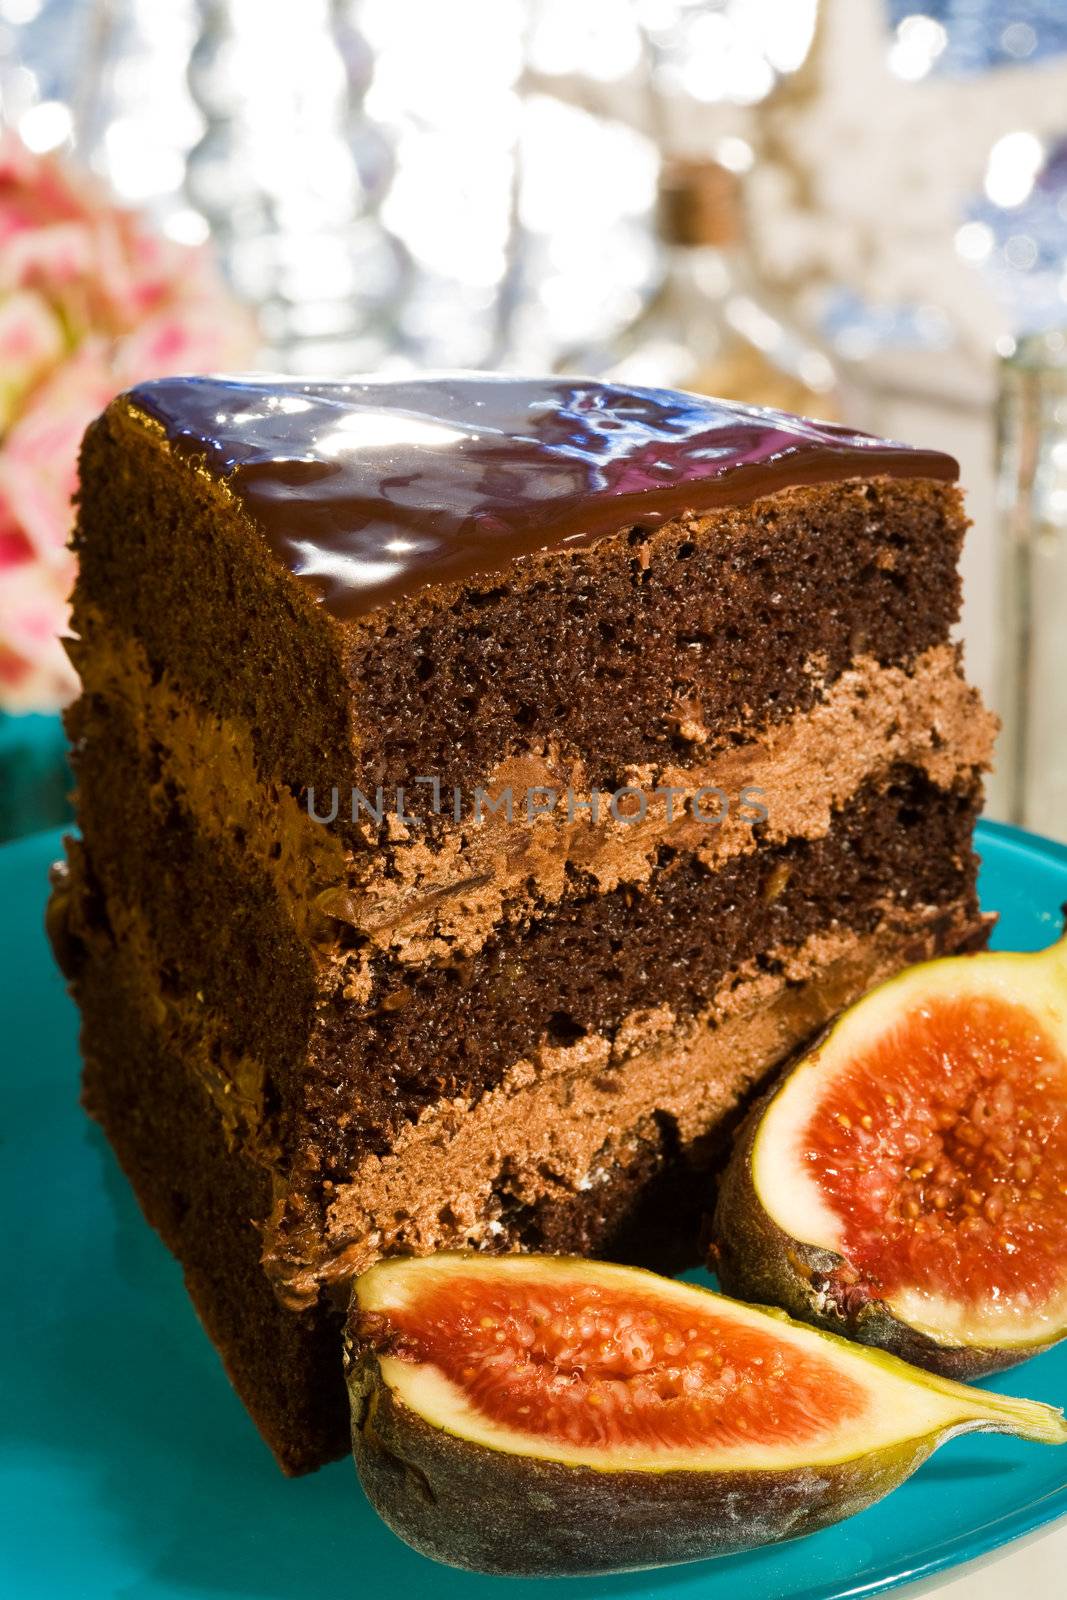 Slice of chocolate cream cake with guava fruit